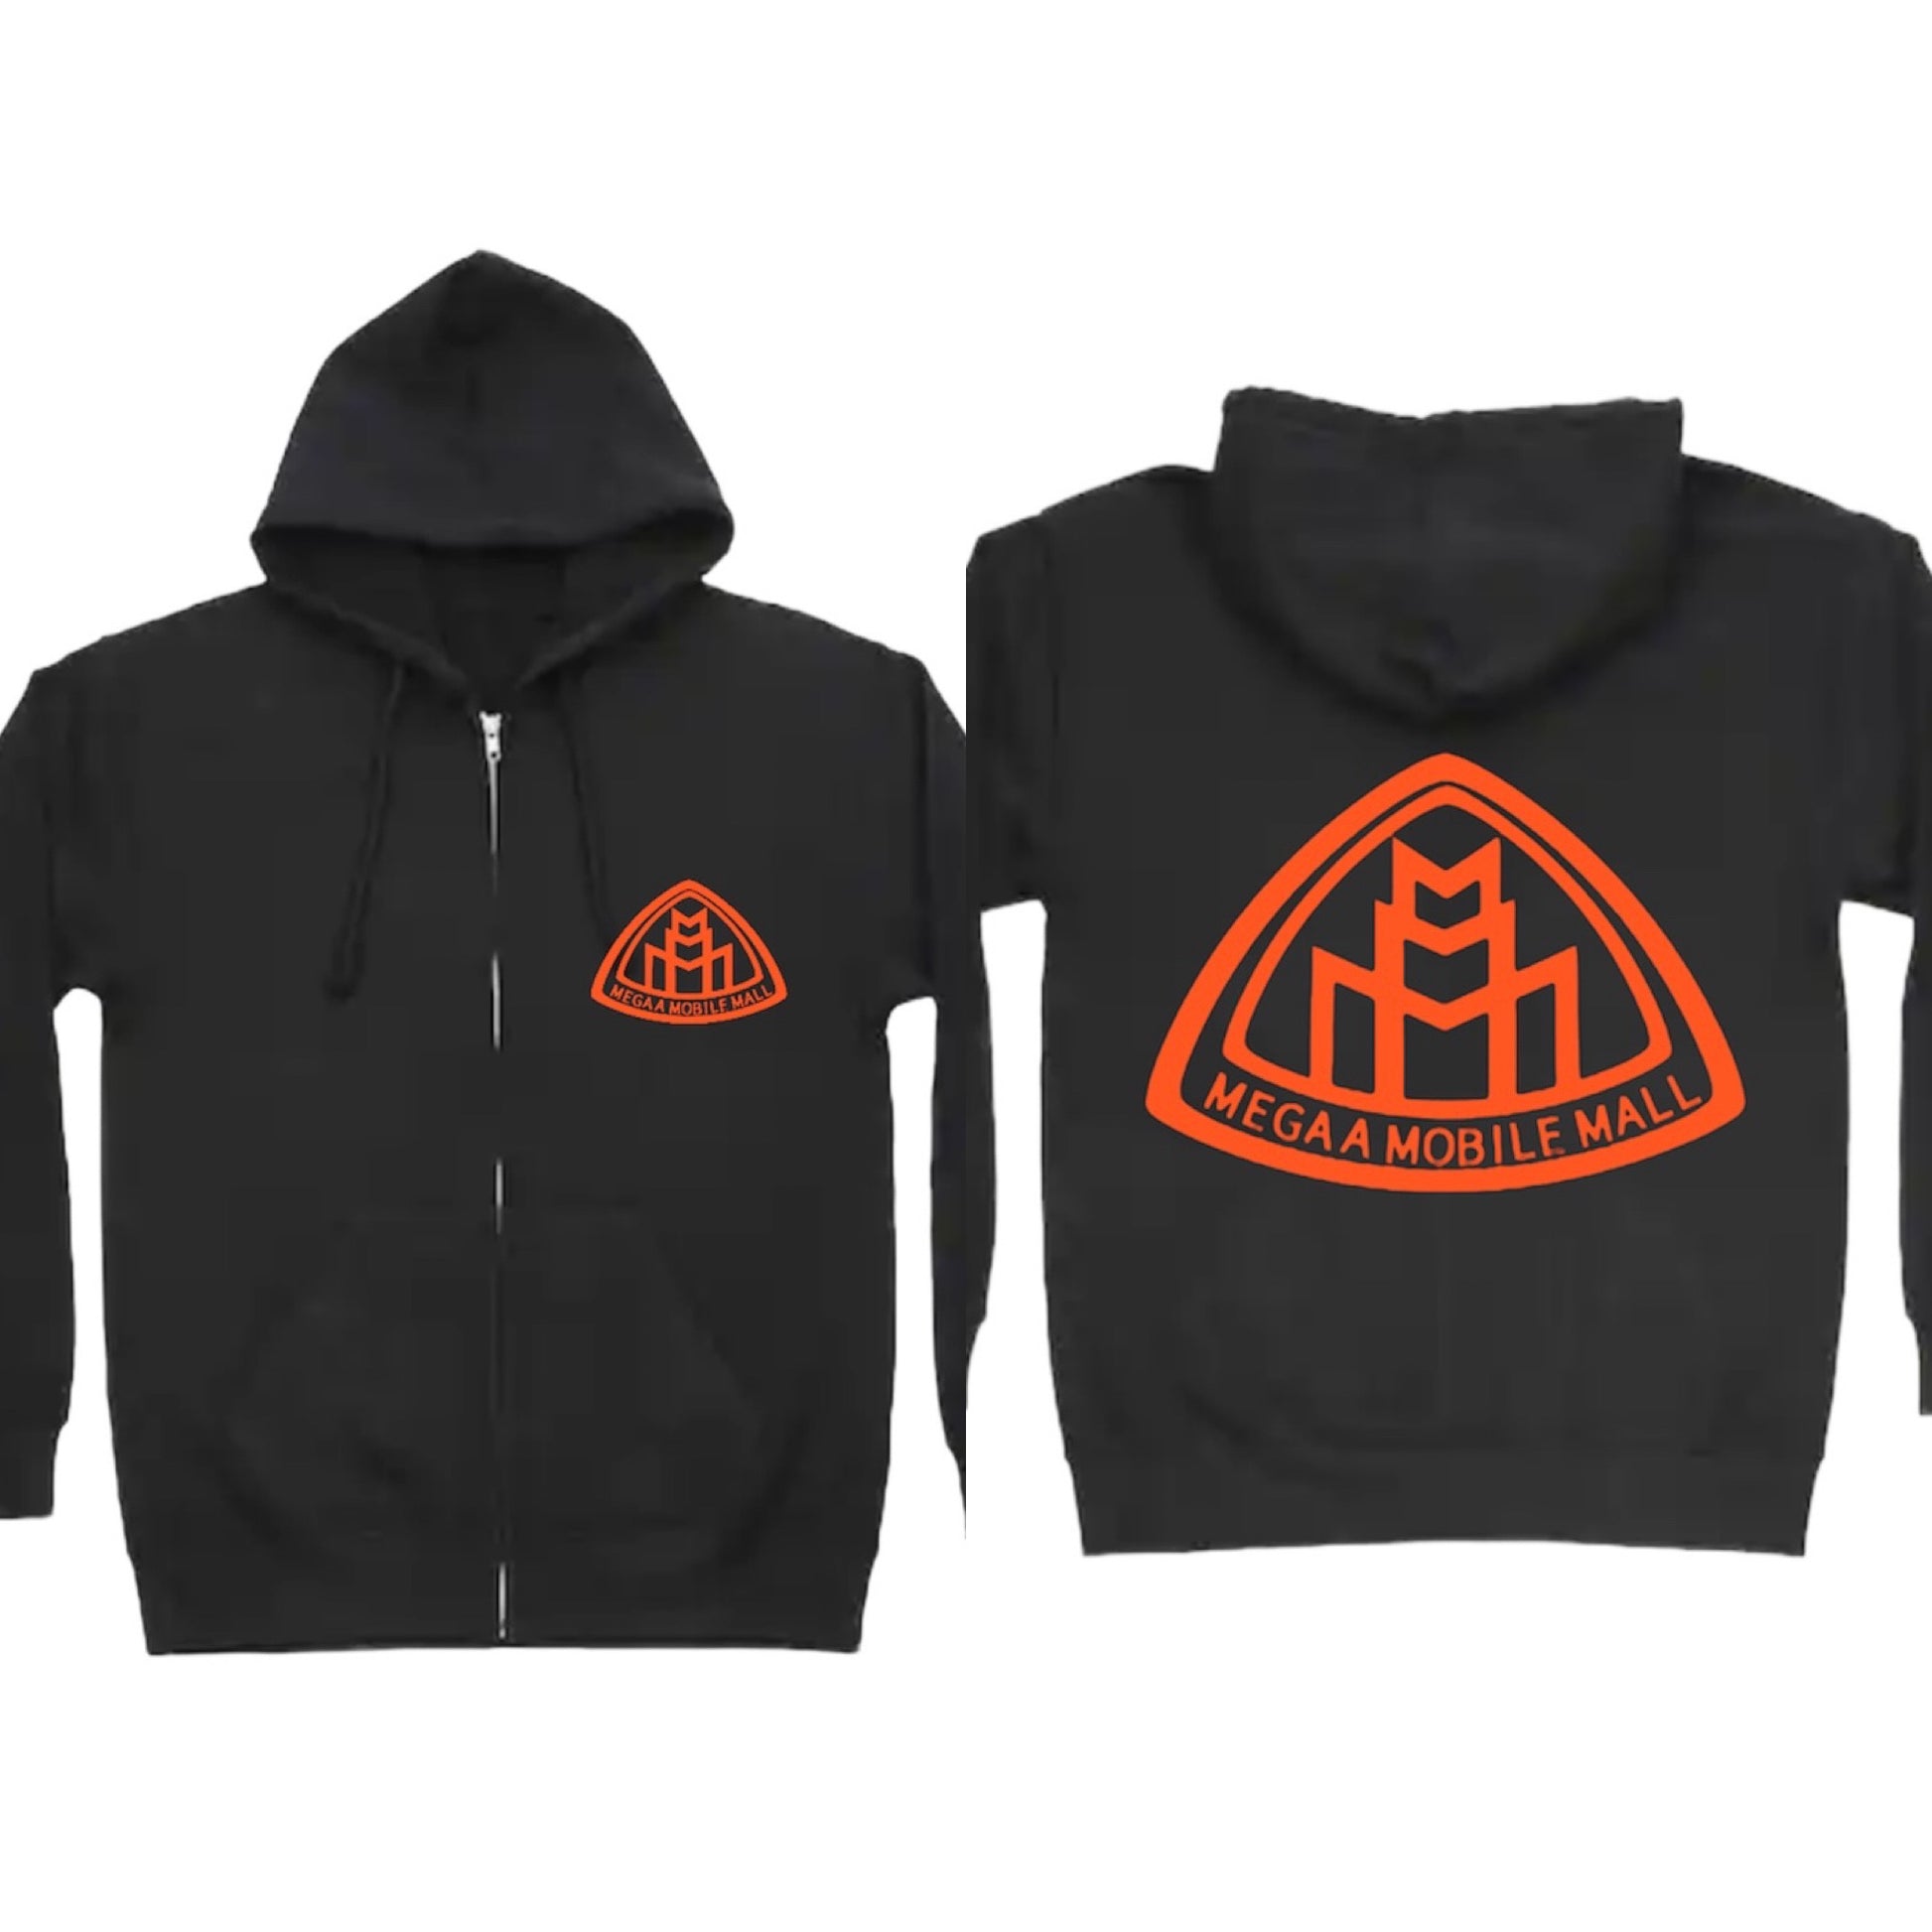 megaamobilemall black zip up hoodie with orange logo color